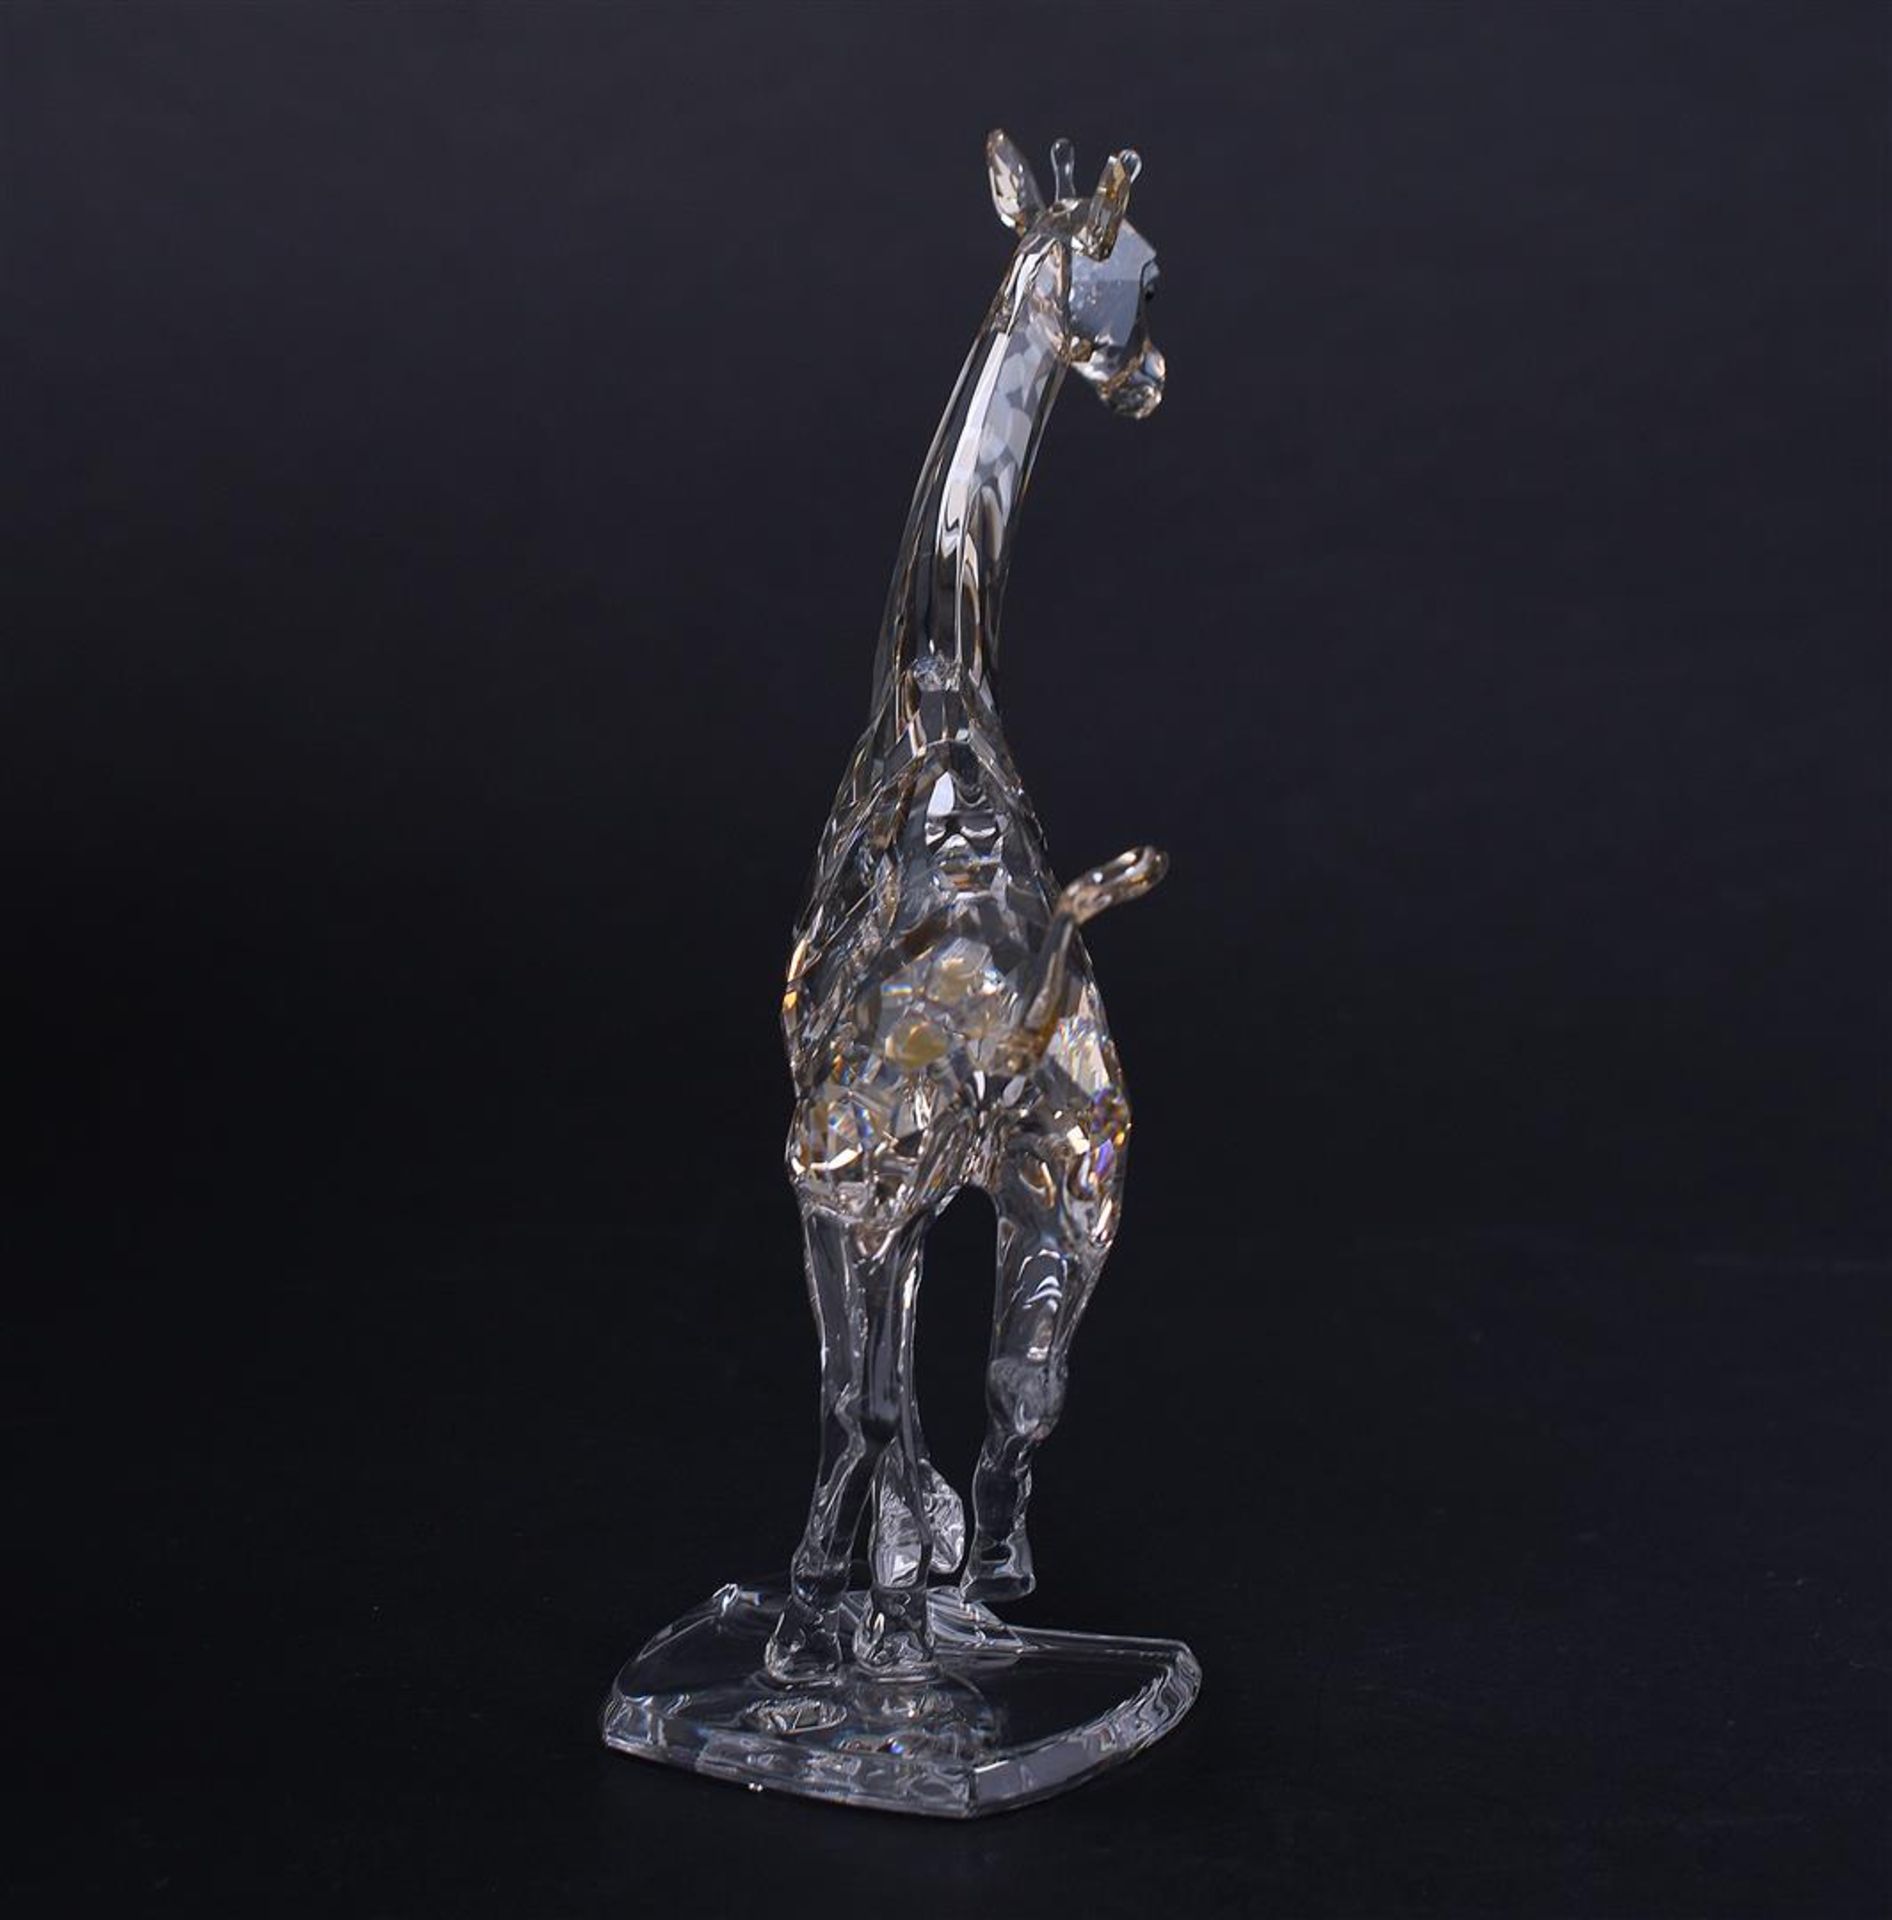 Swarovski, Giraffe, Year of Release 2012, 935896. Includes original box.
17 x 12 cm. - Image 3 of 8